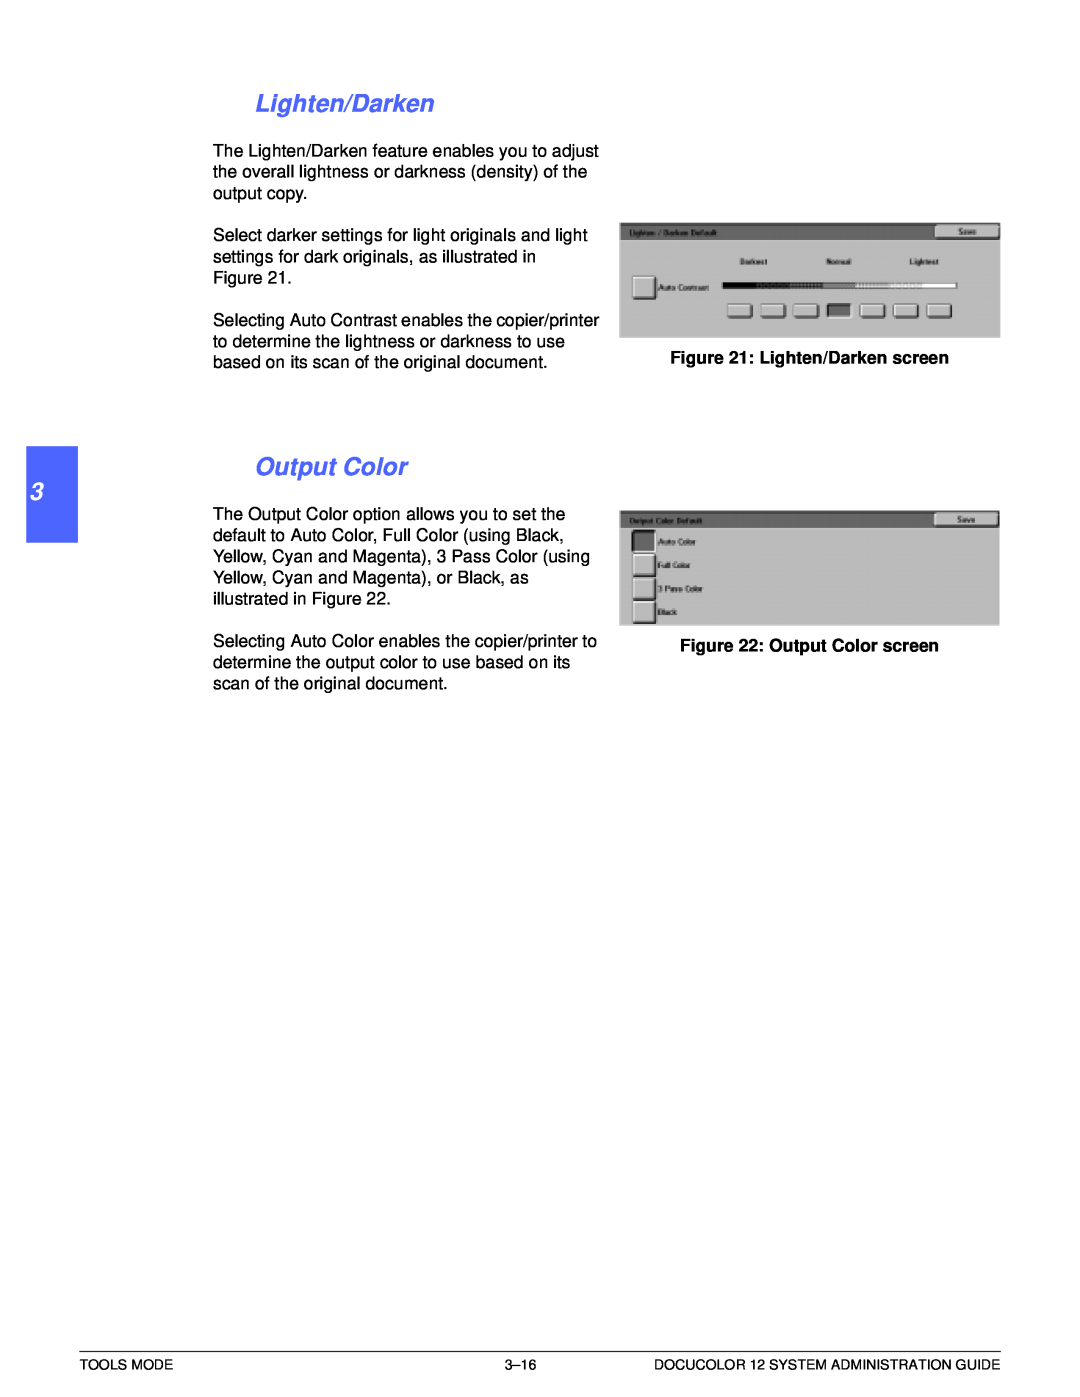 Xerox a2 manual 1 2 3 4 5 6 7, Lighten/Darken screen, Output Color screen 